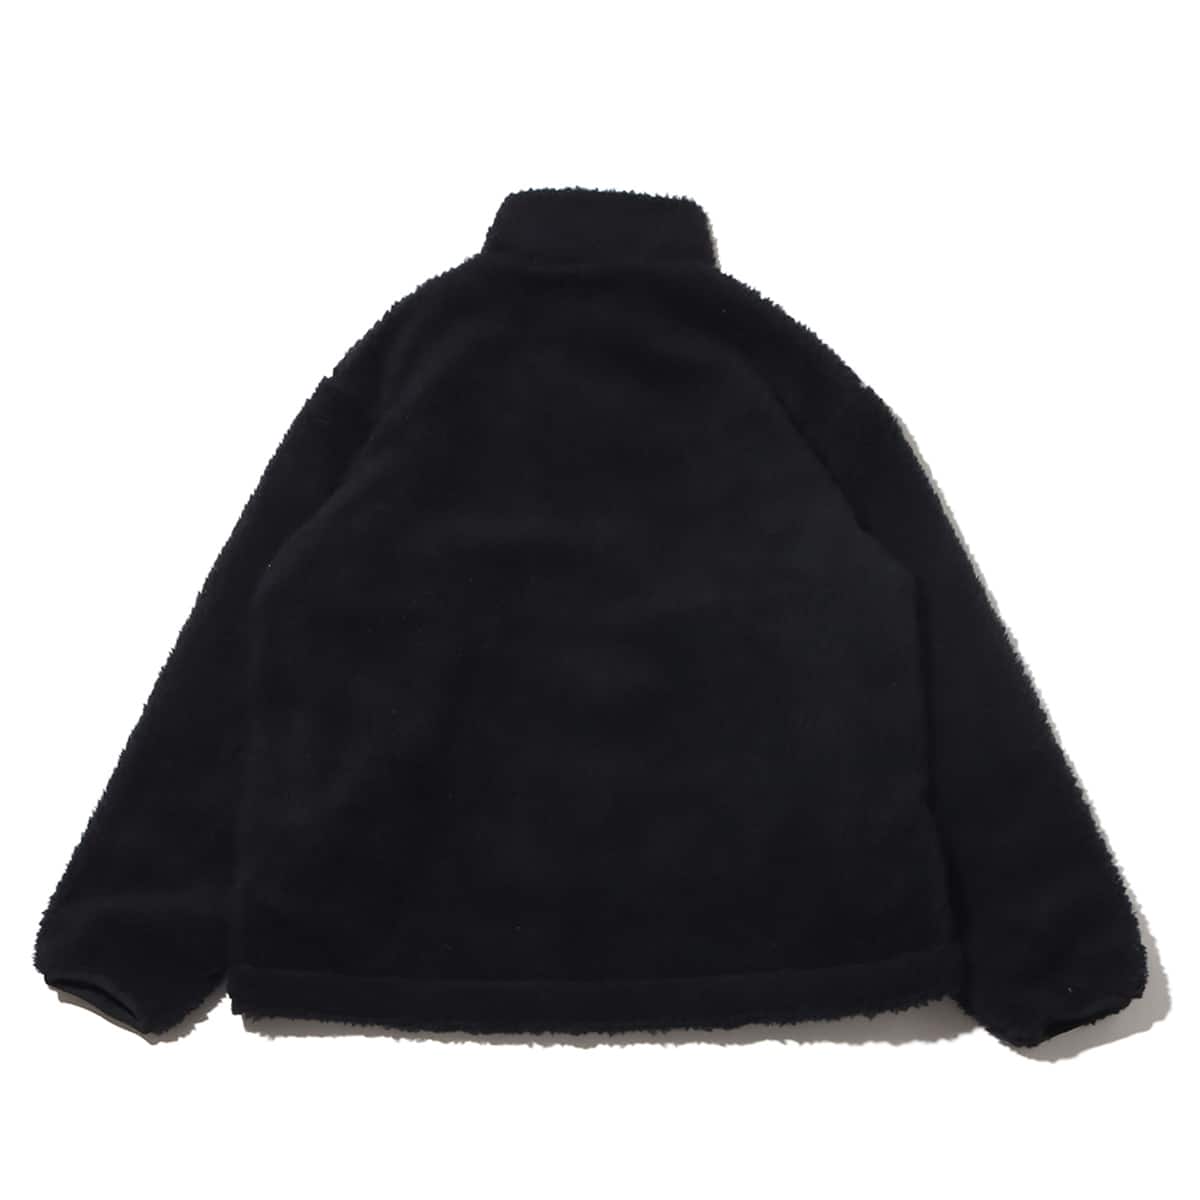 THE NORTH FACE PURPLE LABEL Wool Boa Field Reversible Jacket Black